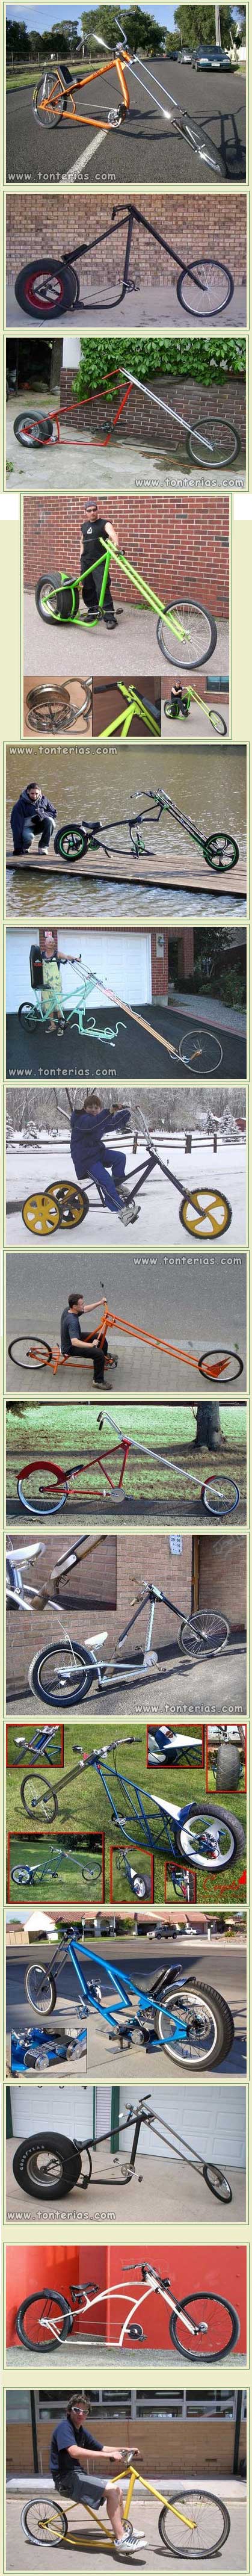 Bicicletas chopper